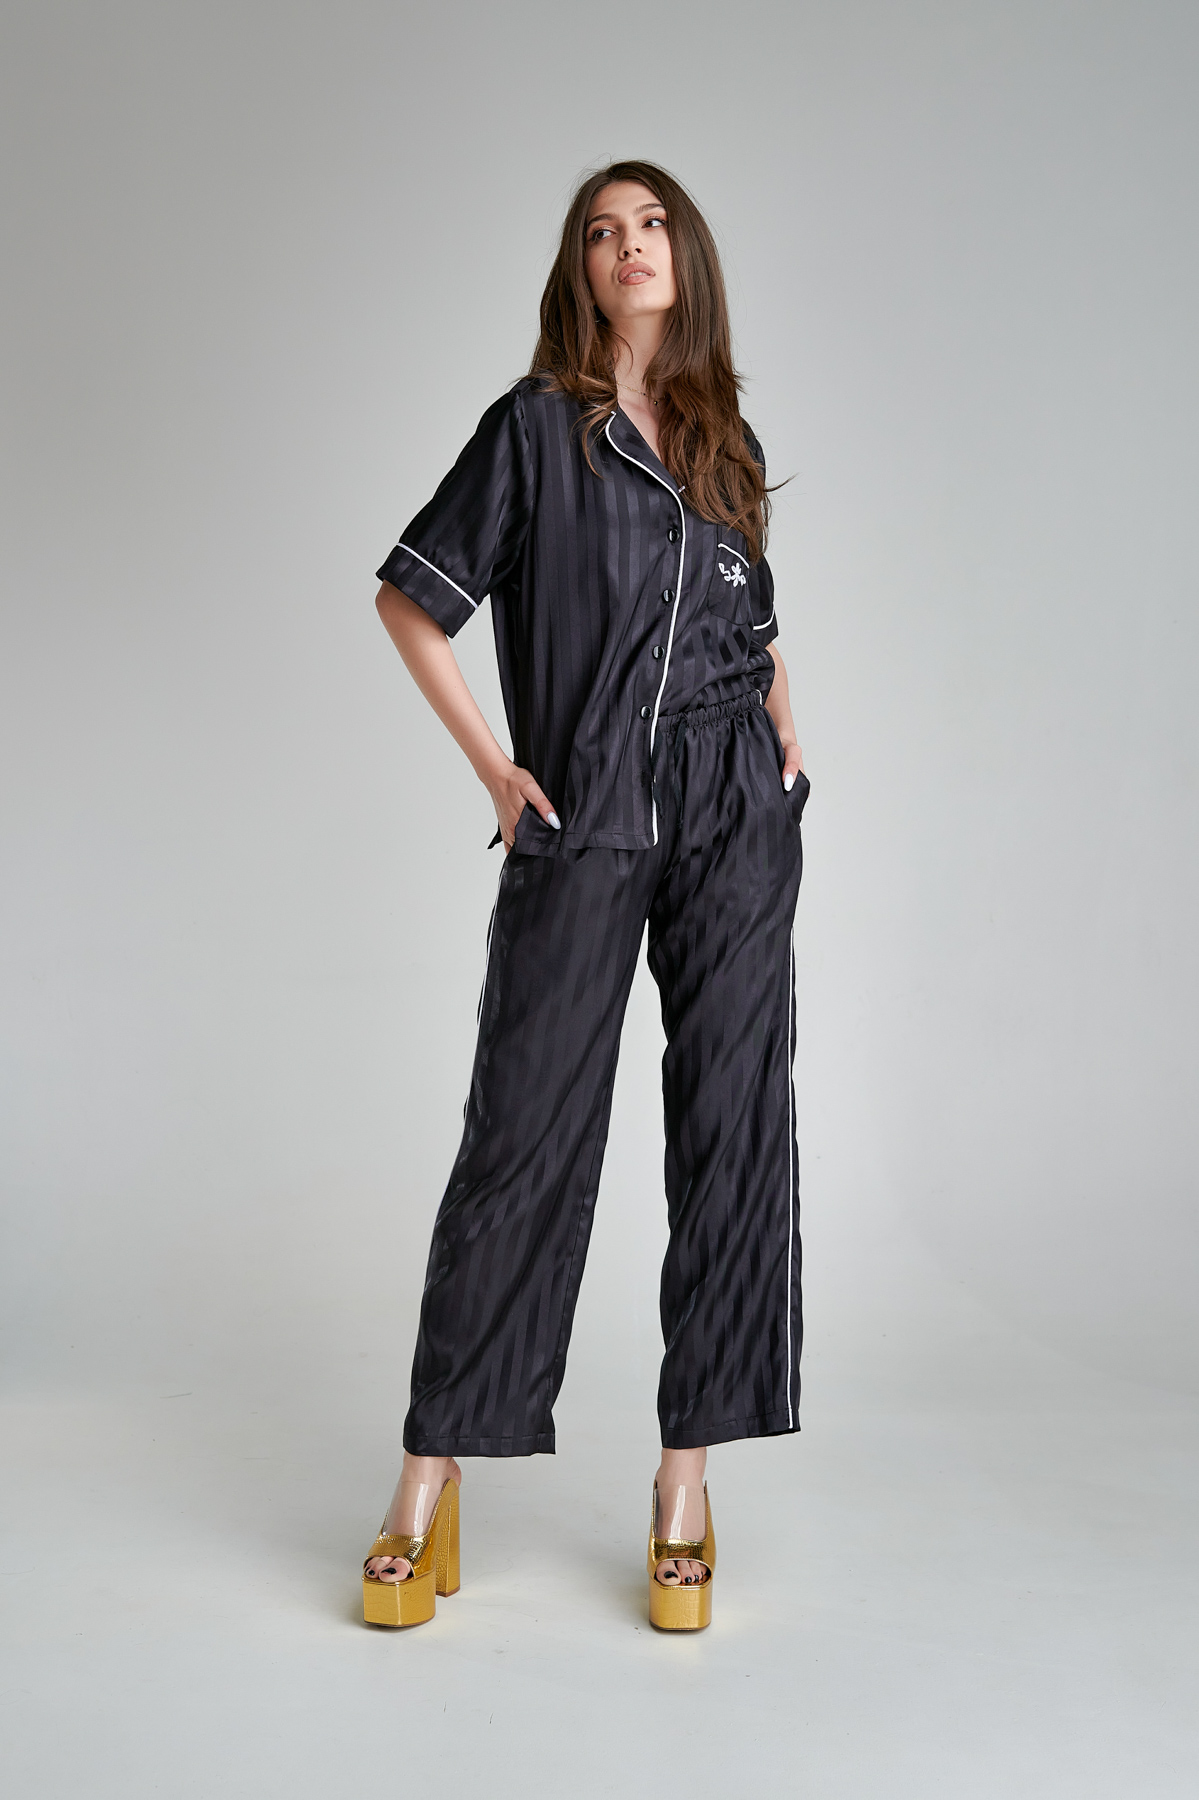 Pantalon scurt SURY din viscoza satinata negru. Materiale naturale, design unicat, cu broderie si aplicatii handmade